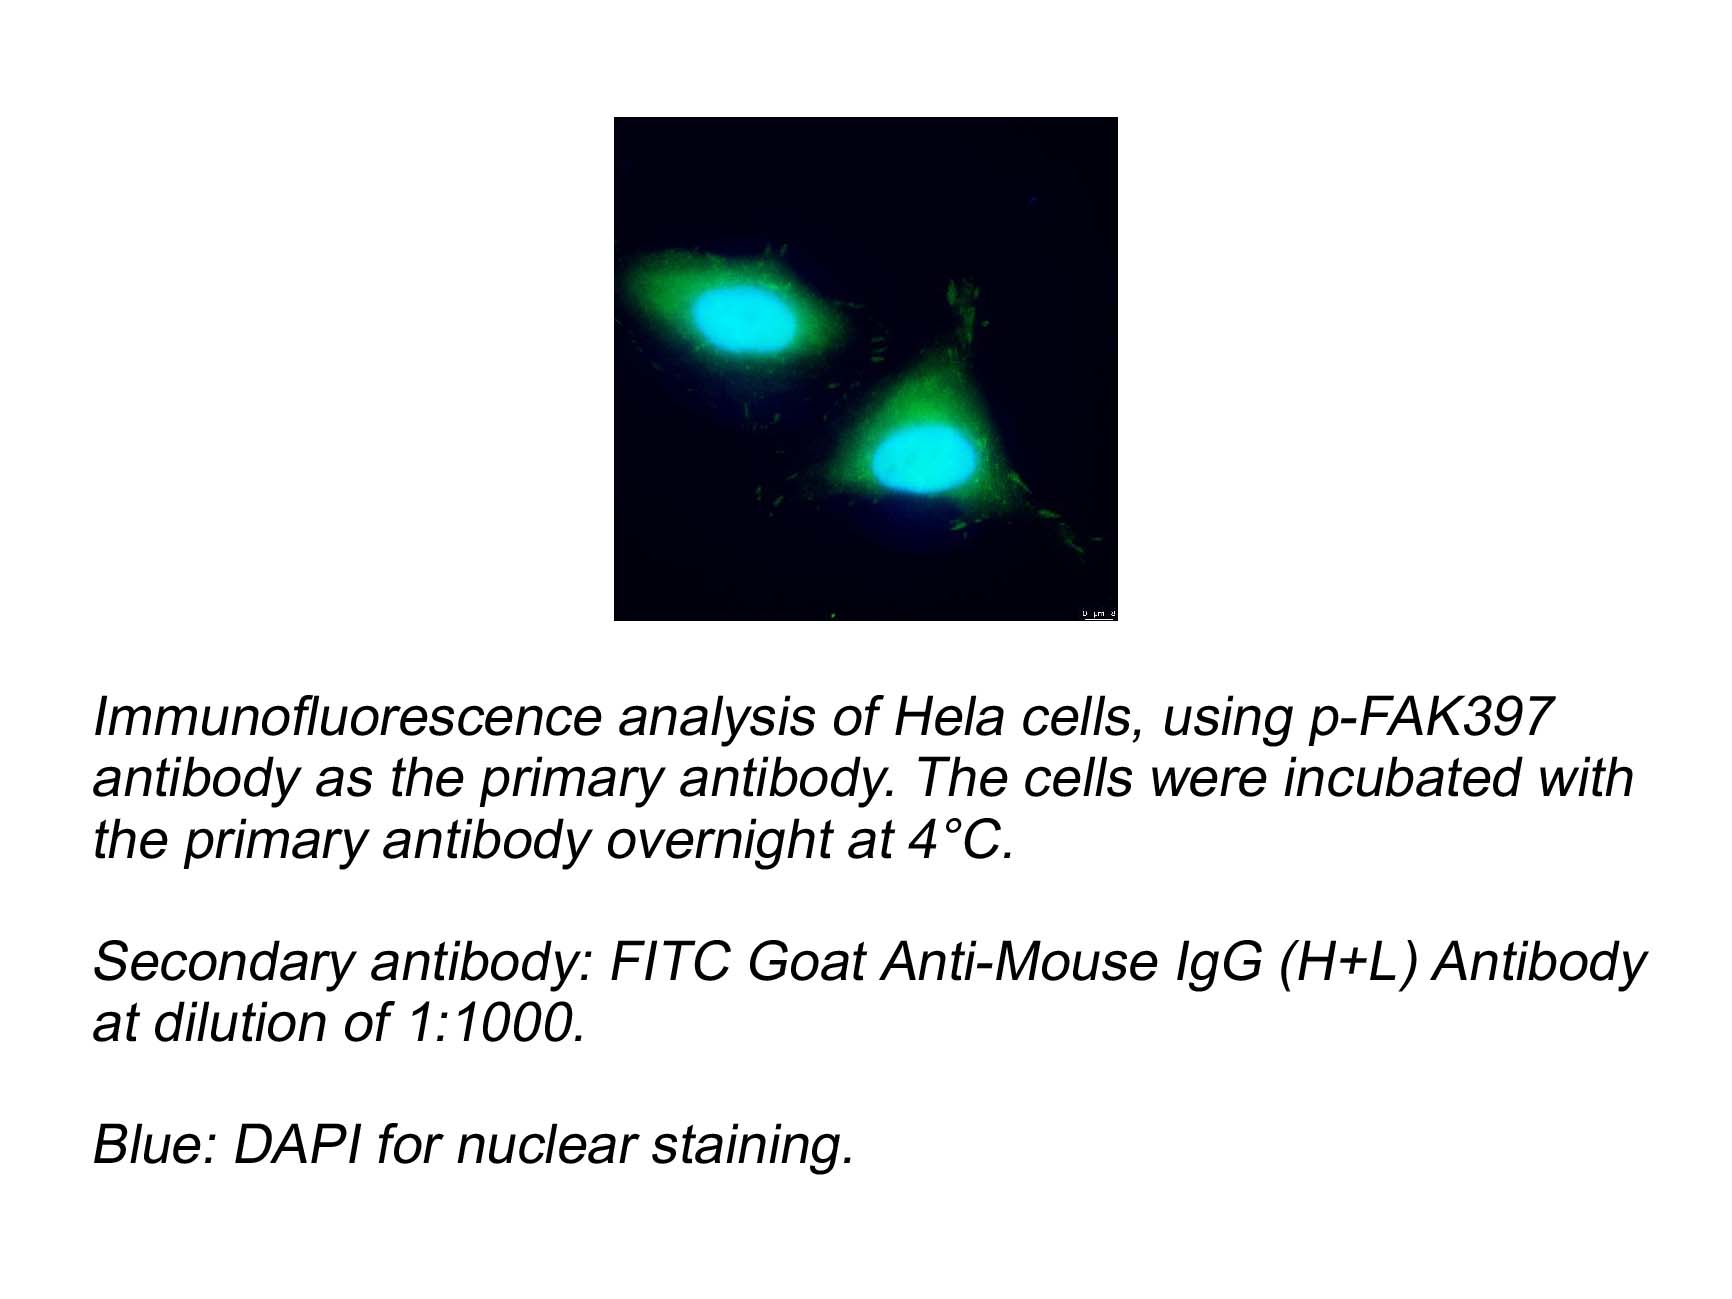 FITC Goat Anti-Mouse IgG (H+L) Antibody